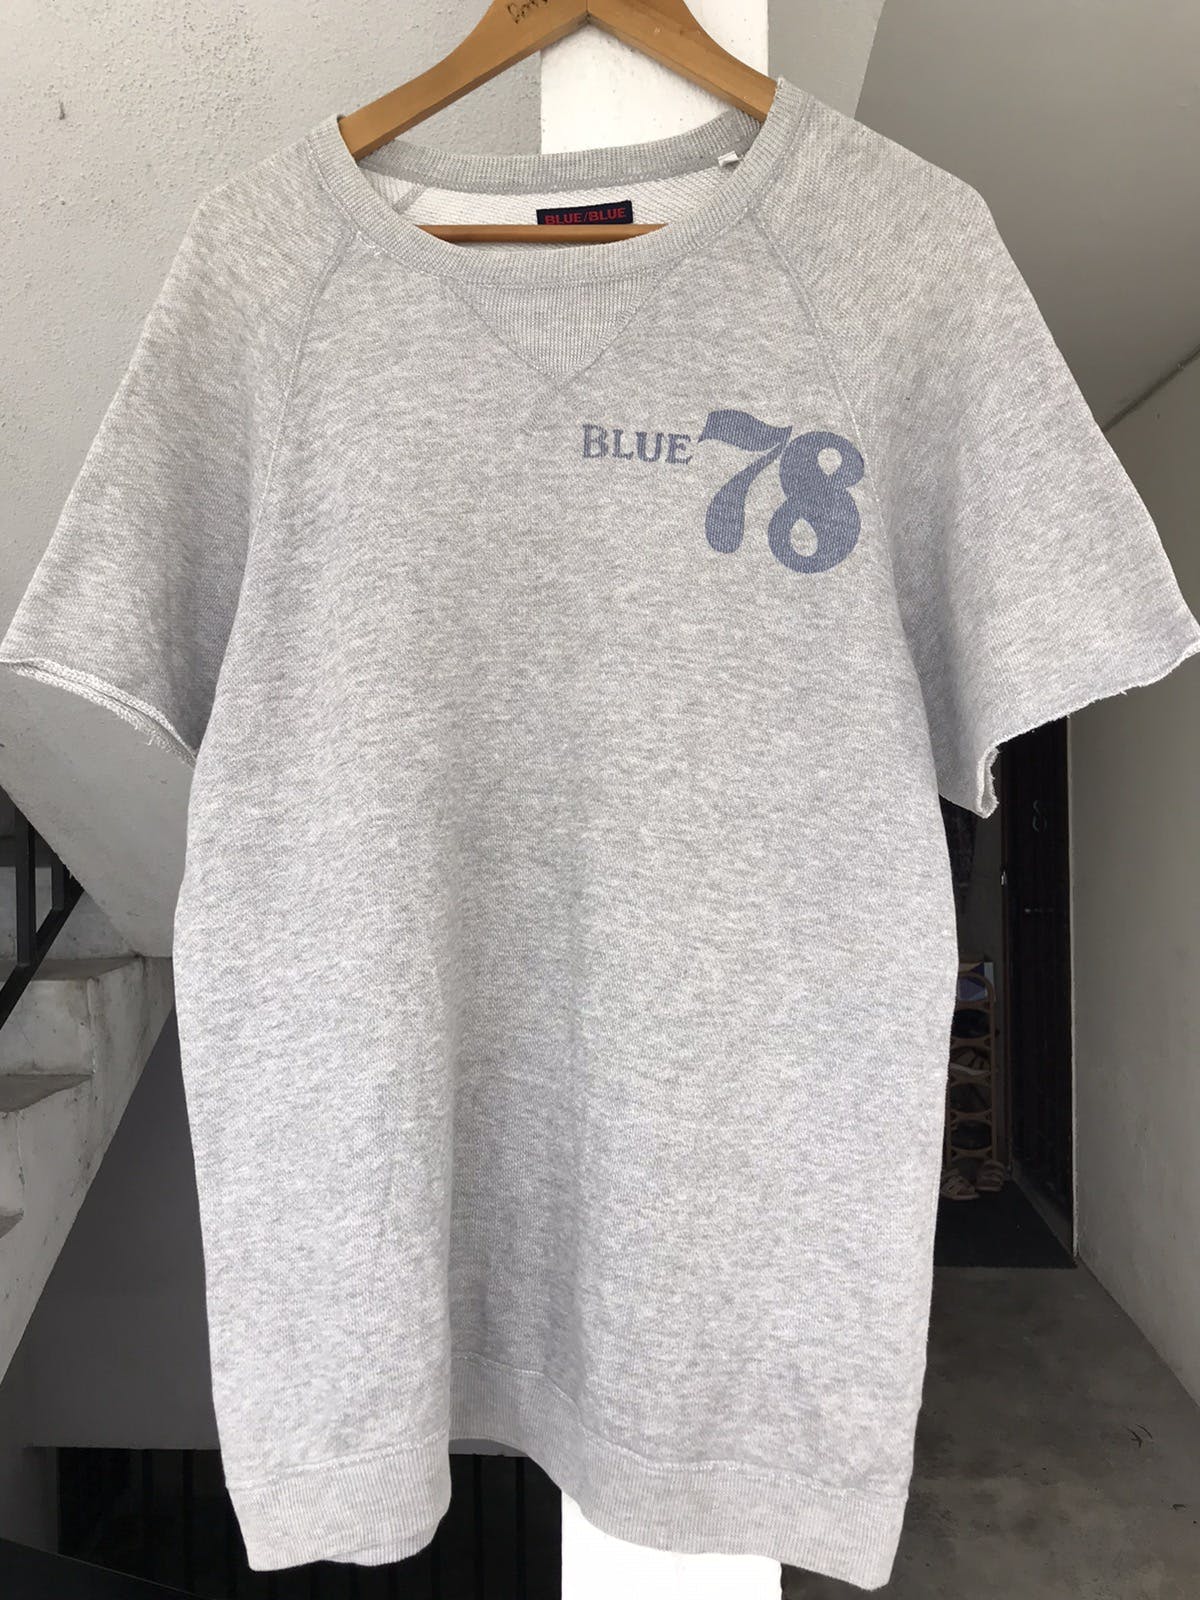 Blue Blue Japan Sleeve Cut Sweatshirt - 5